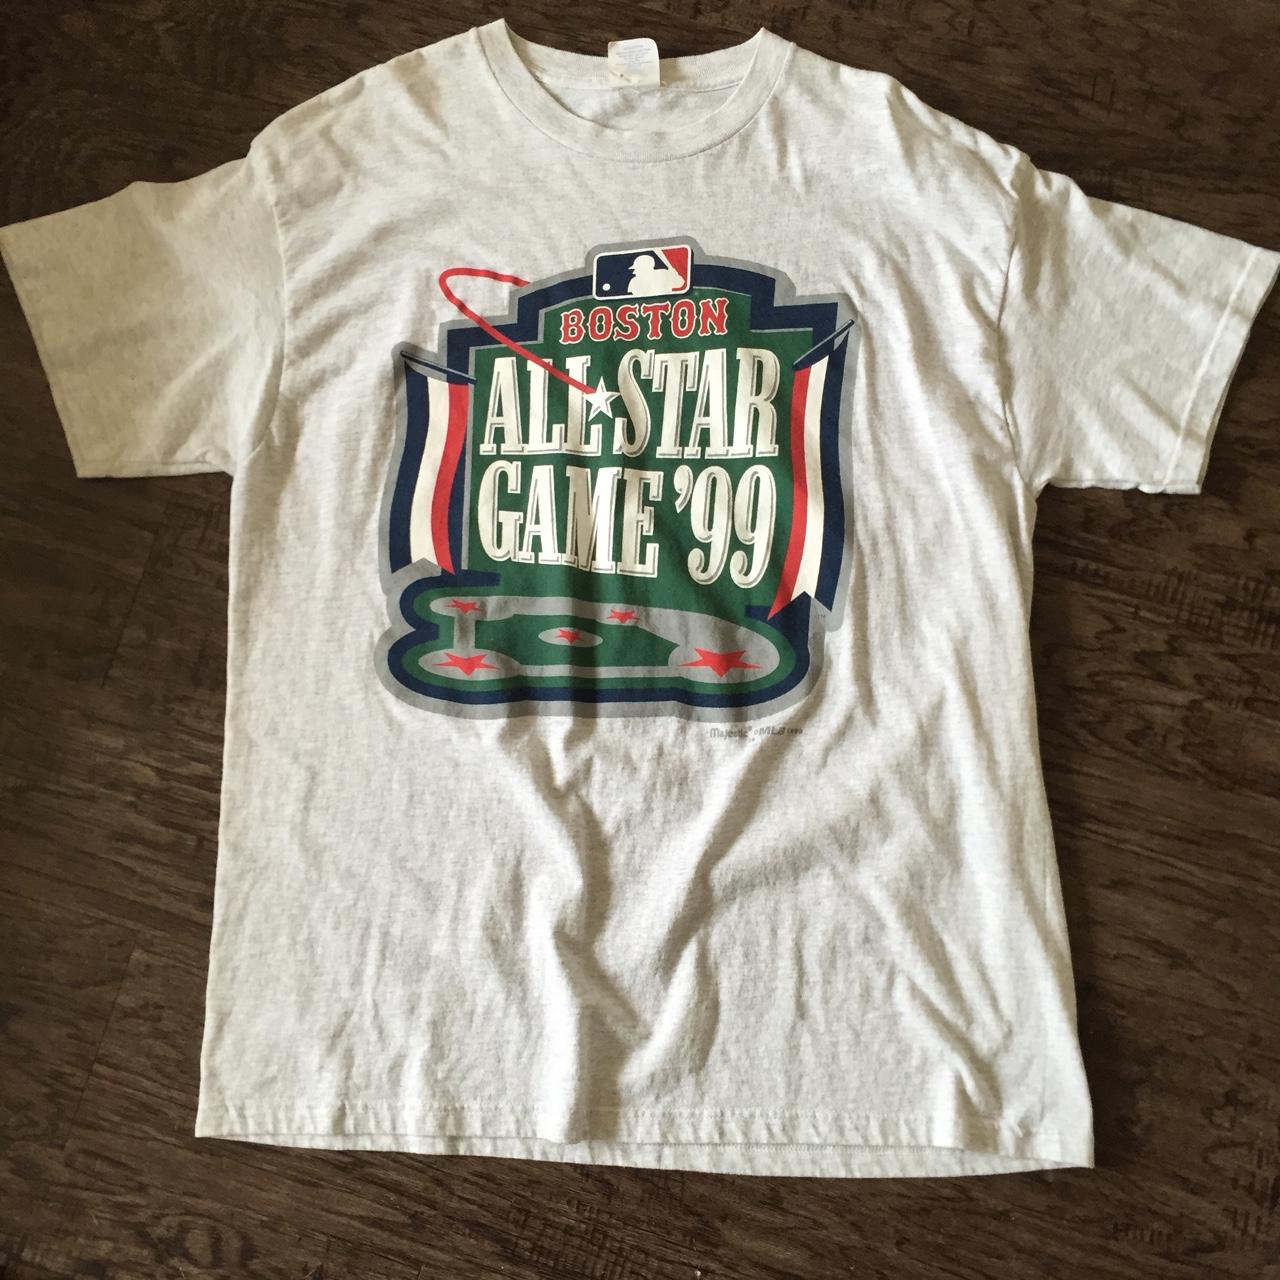 Vintage 1999 MLB boston all star game shirt. Size